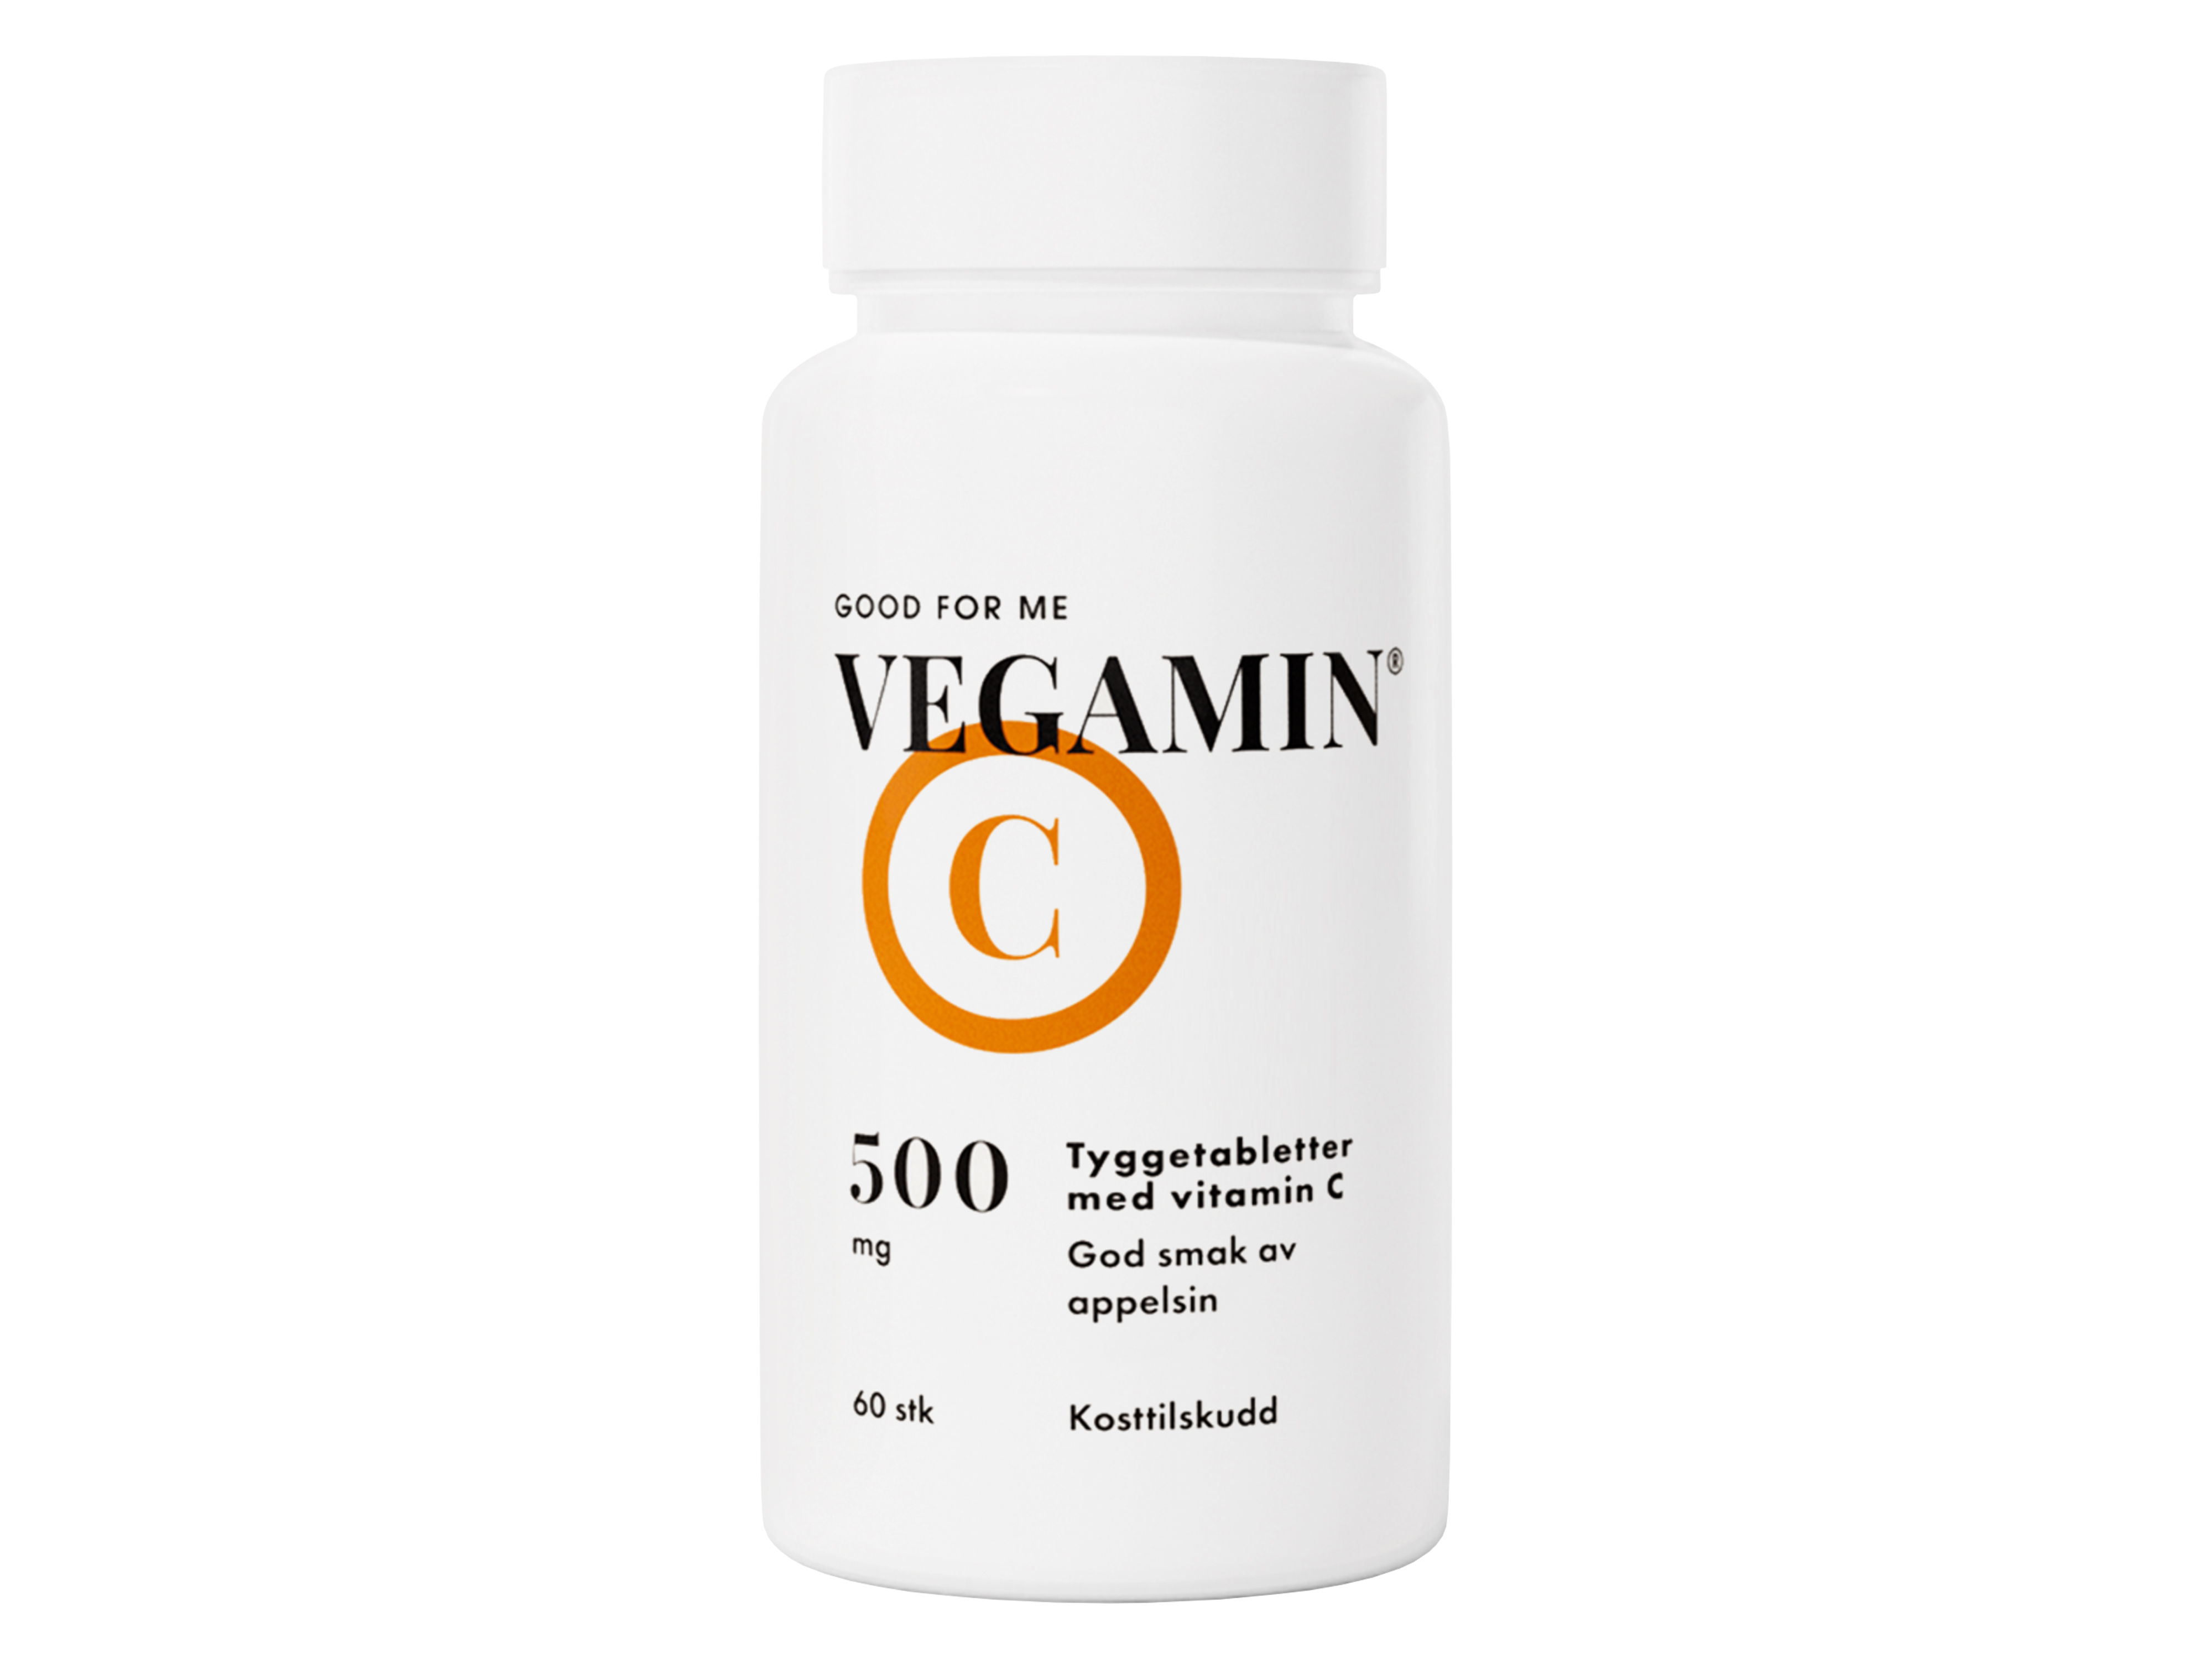 Vegamin C-vitamin 500 mg, 60 tyggetabletter,